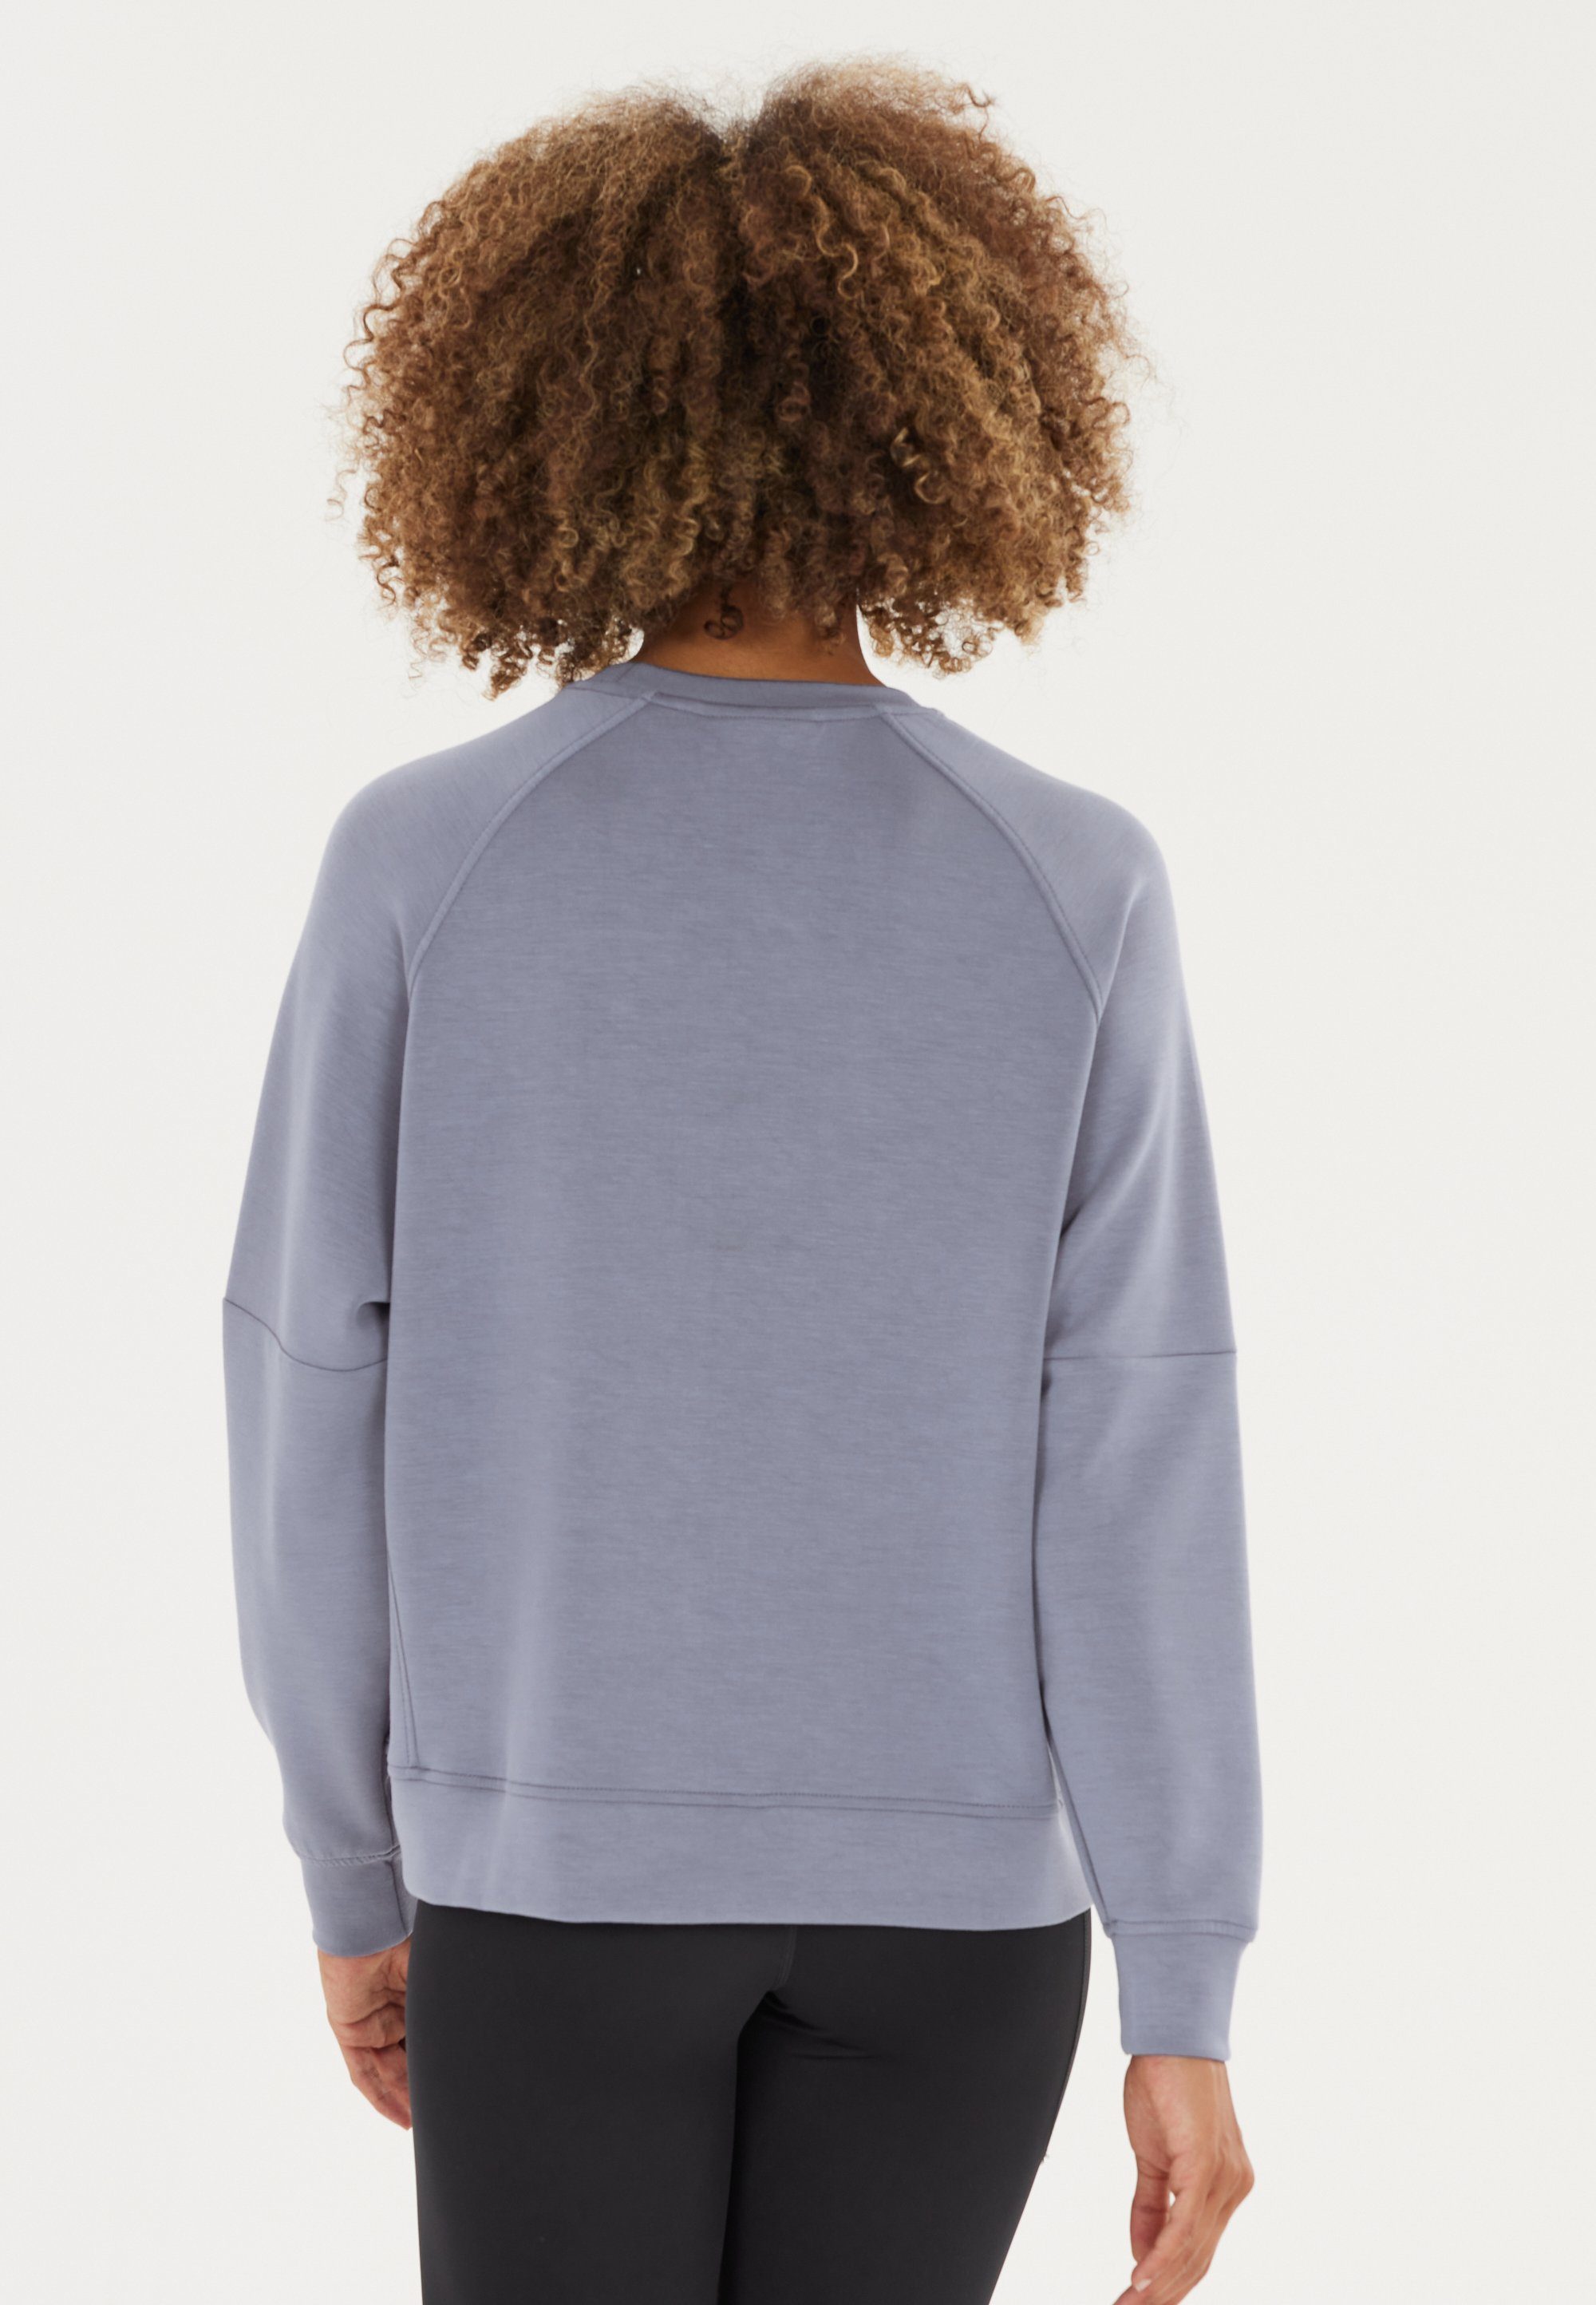 ATHLECIA Sweatshirt extra Jacey Material weichem blau aus